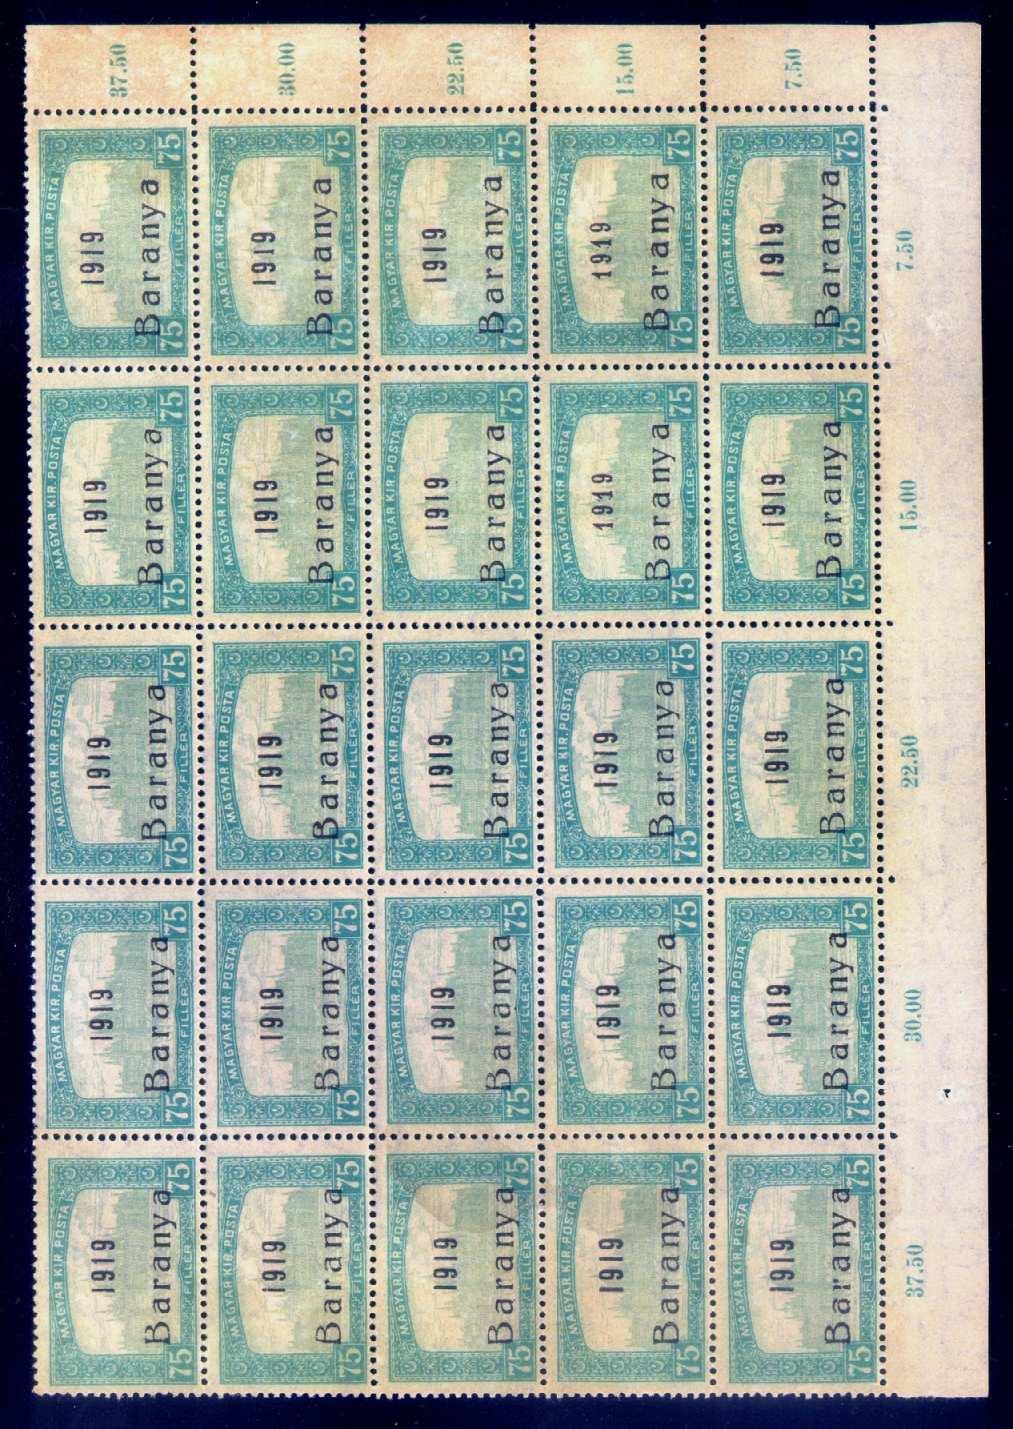 Quarter sheet of 75 fillér parliament base stamps overprinted using the pedal press (Brainard #D28).